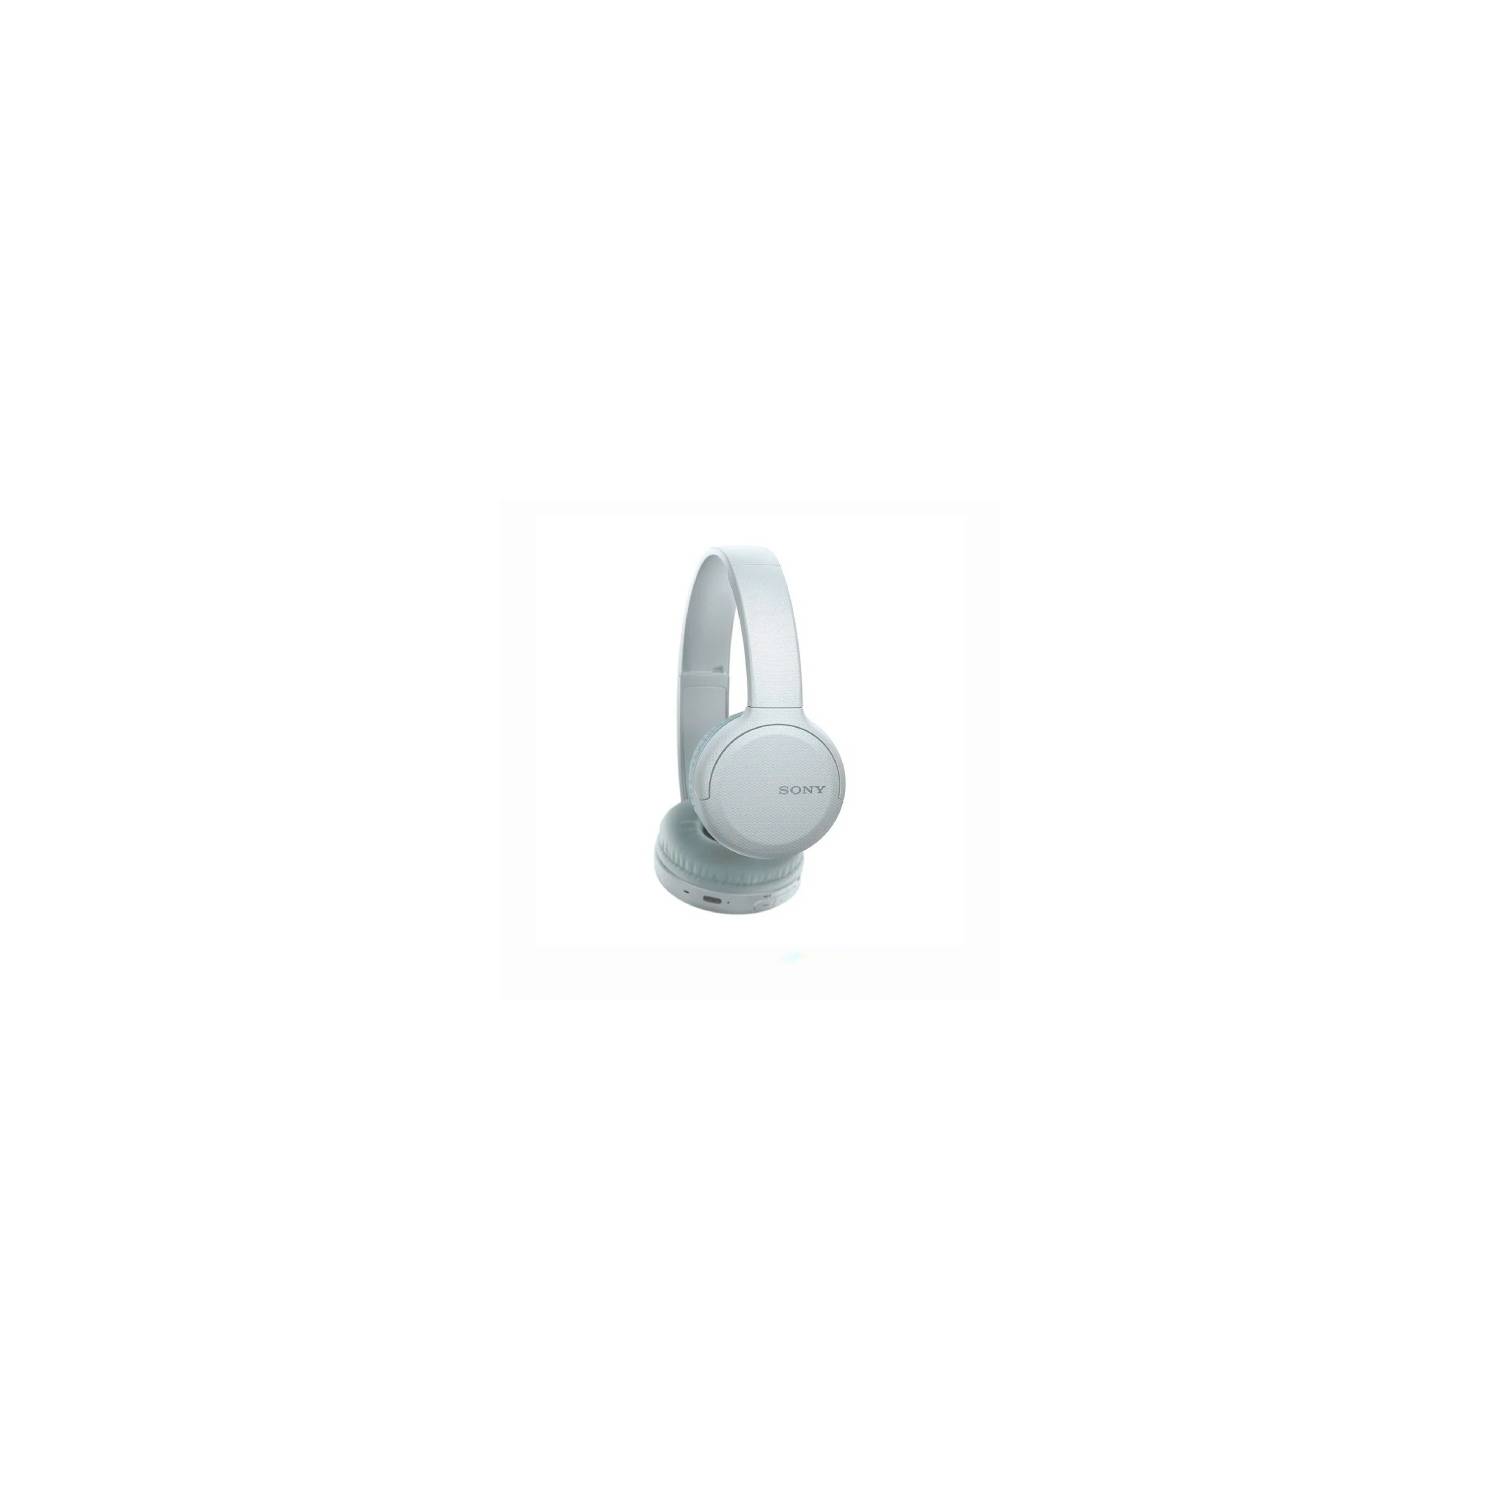 Sony WH-CH510 Auriculares Bluetooth Blancos